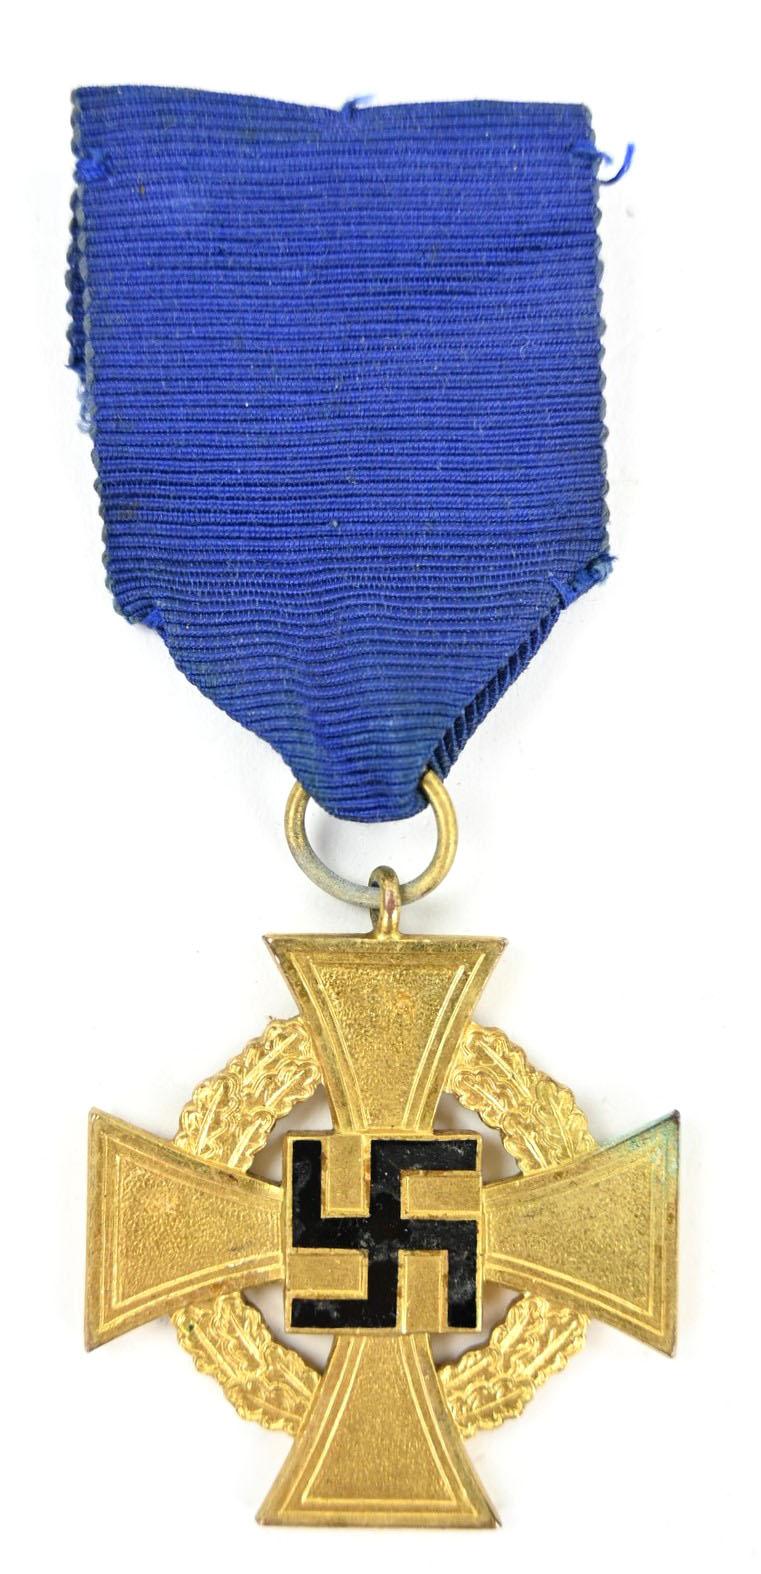 German 40 Years Faithfull Service Medal